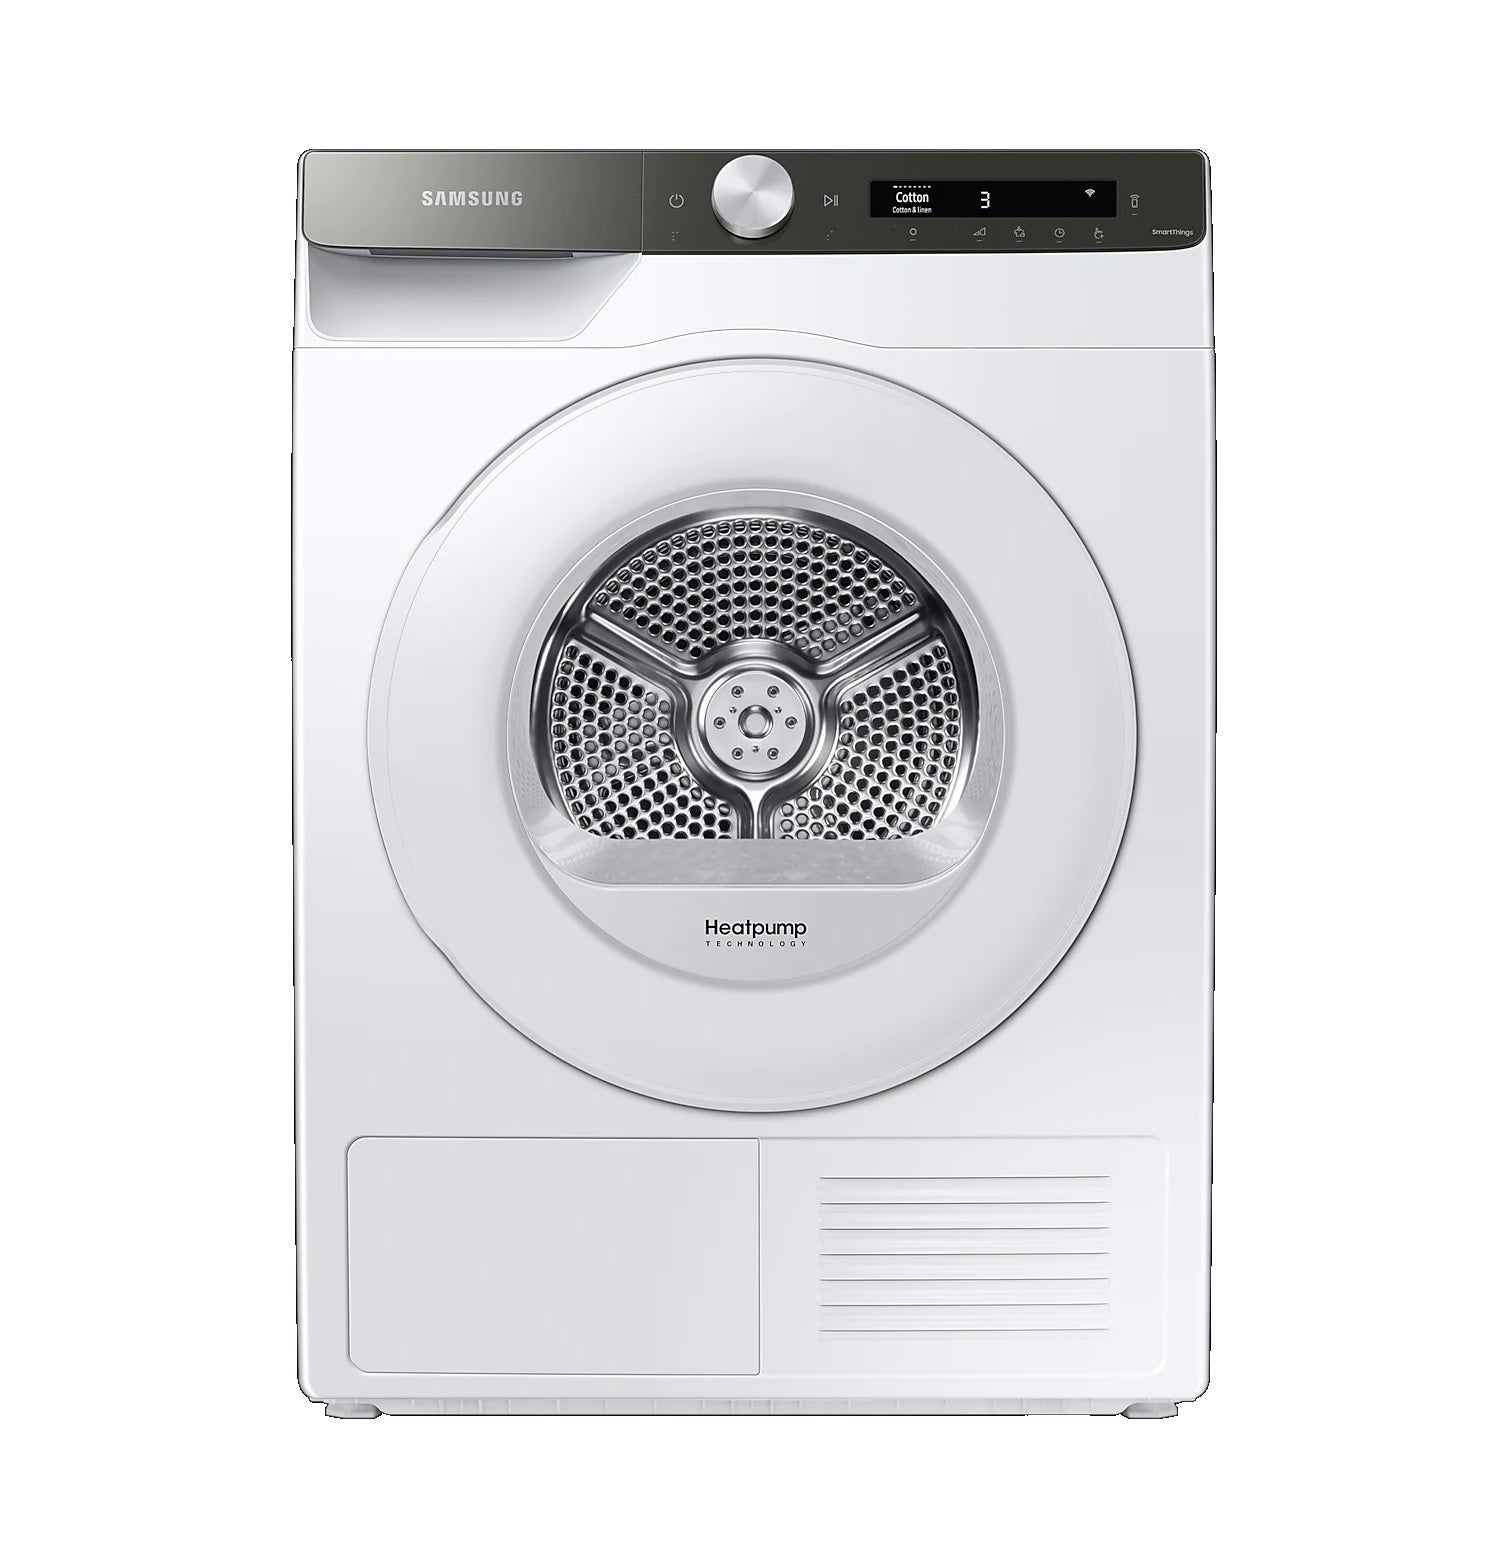 Samsung DV80T5220 Dryer